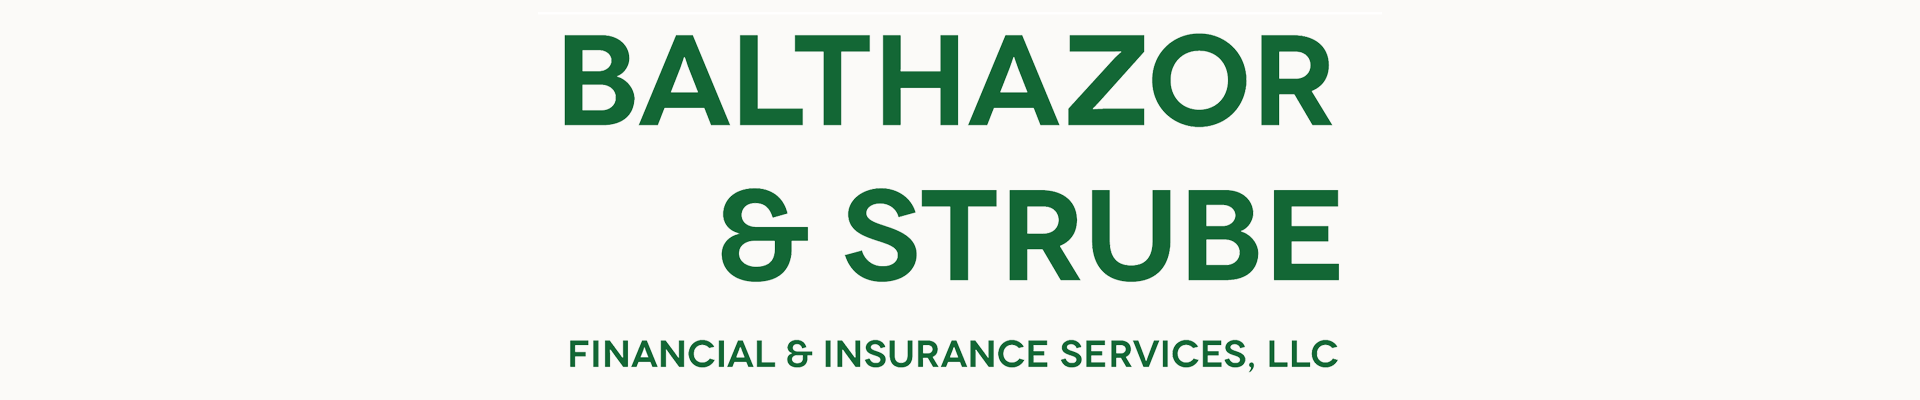 Balthazor & Strube Financial & Insurance Services, LLC